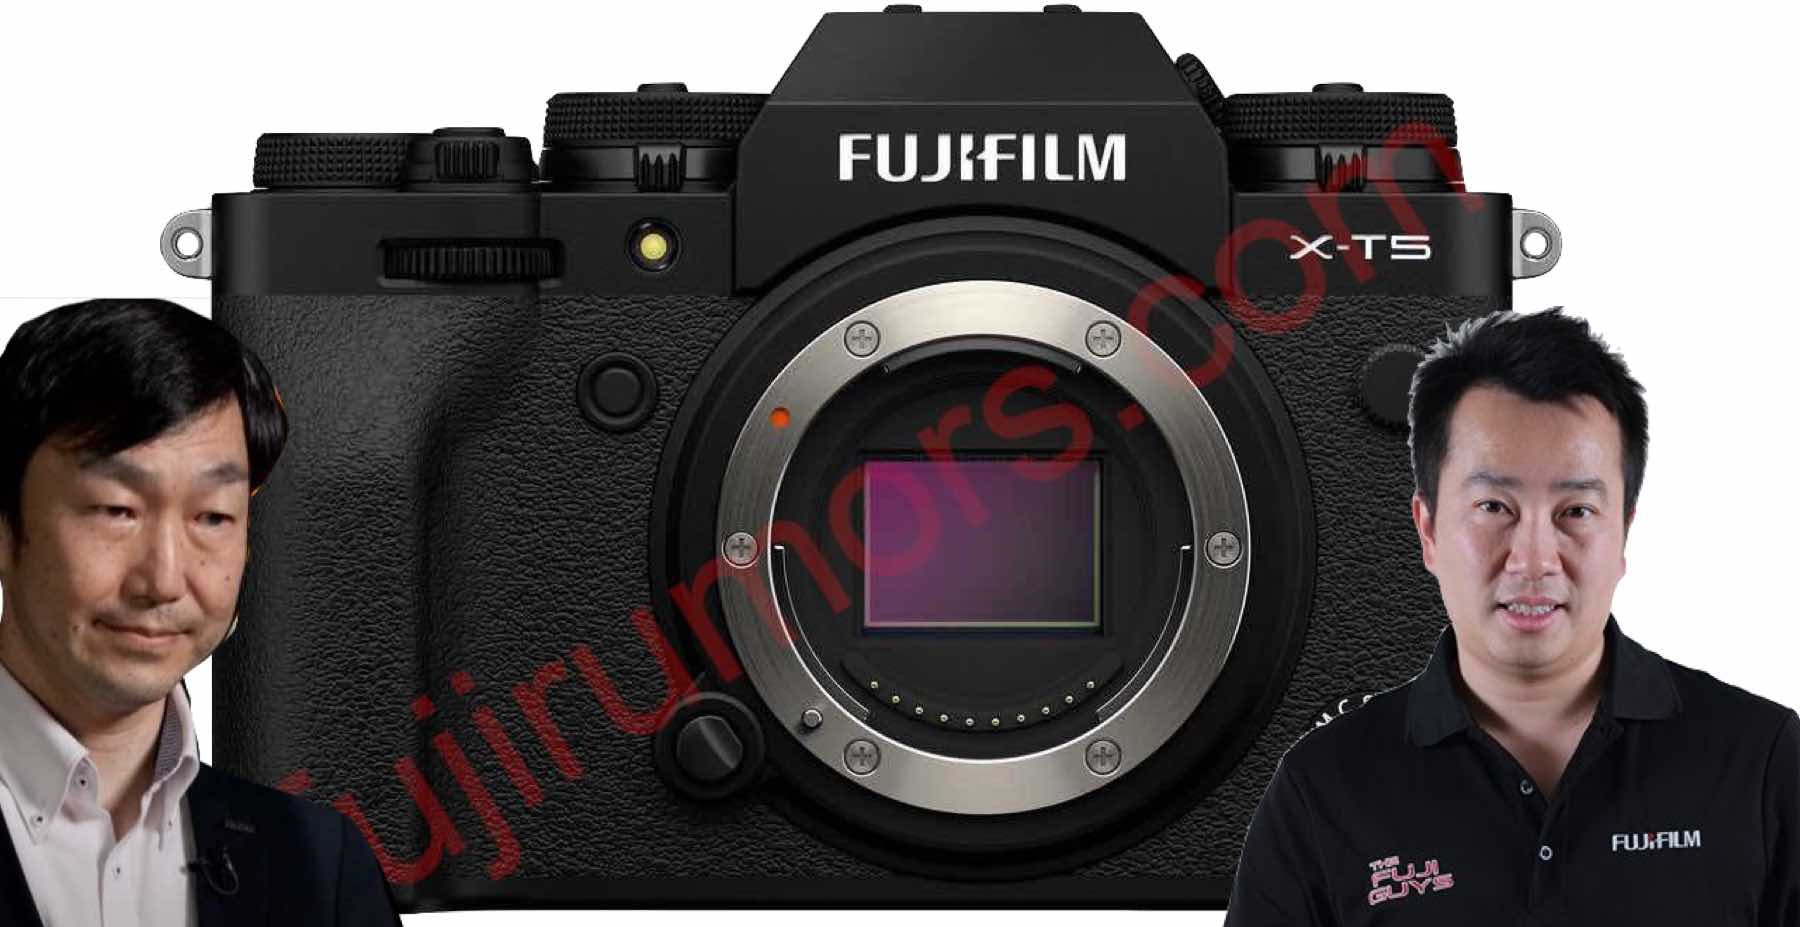 Fujifilm XT5 has weird mark on sensor, sent to Fuji and they said